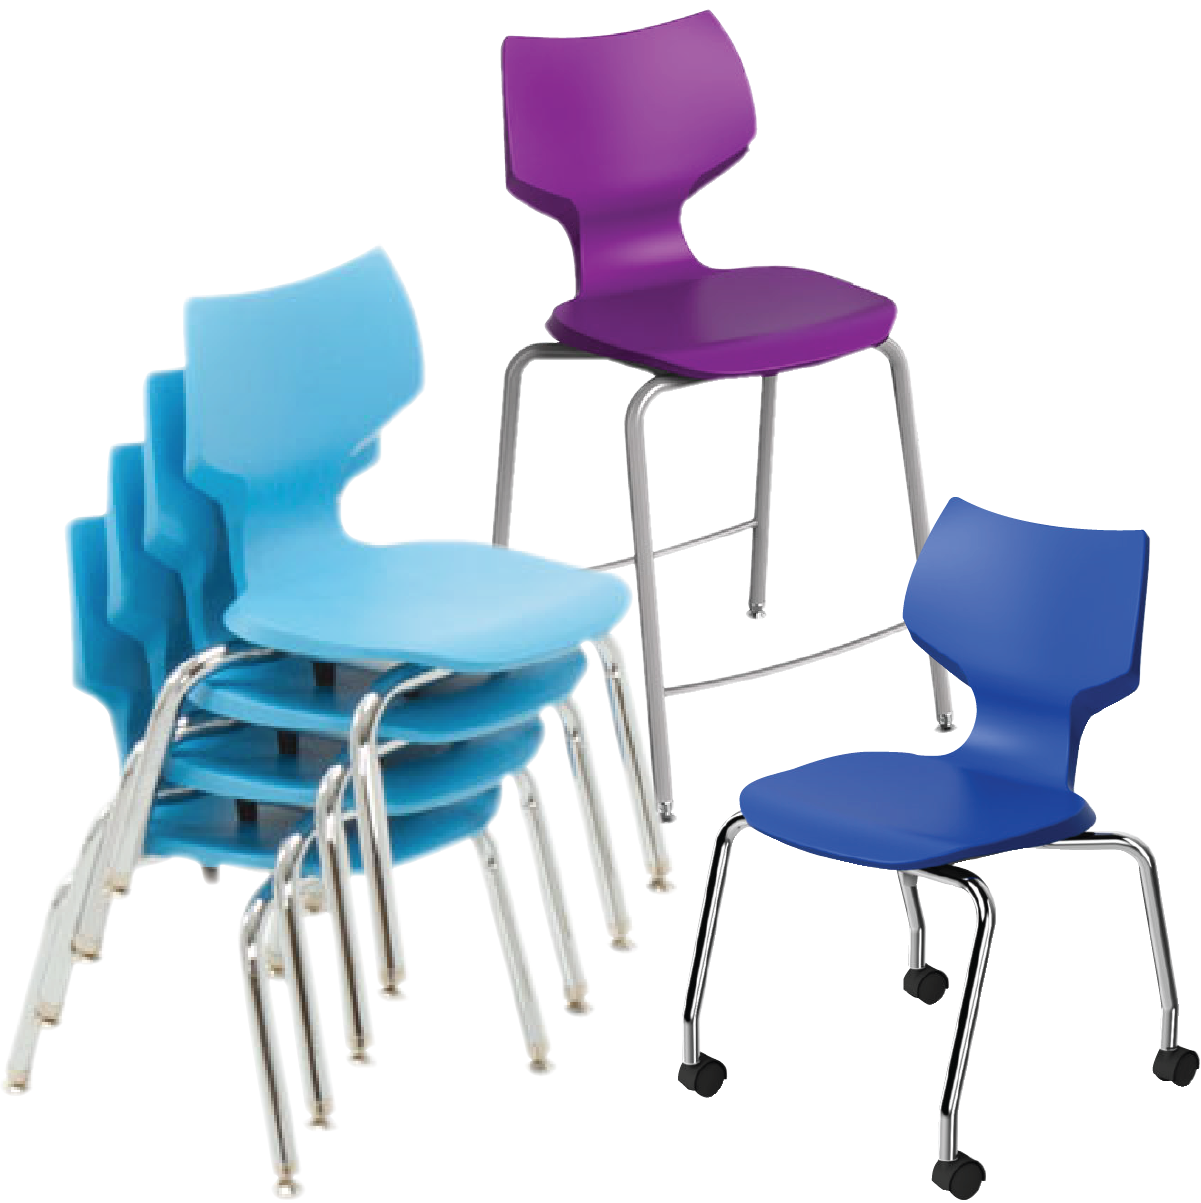 Lone Star Furnishings - Texas School Furniture - flavors seating